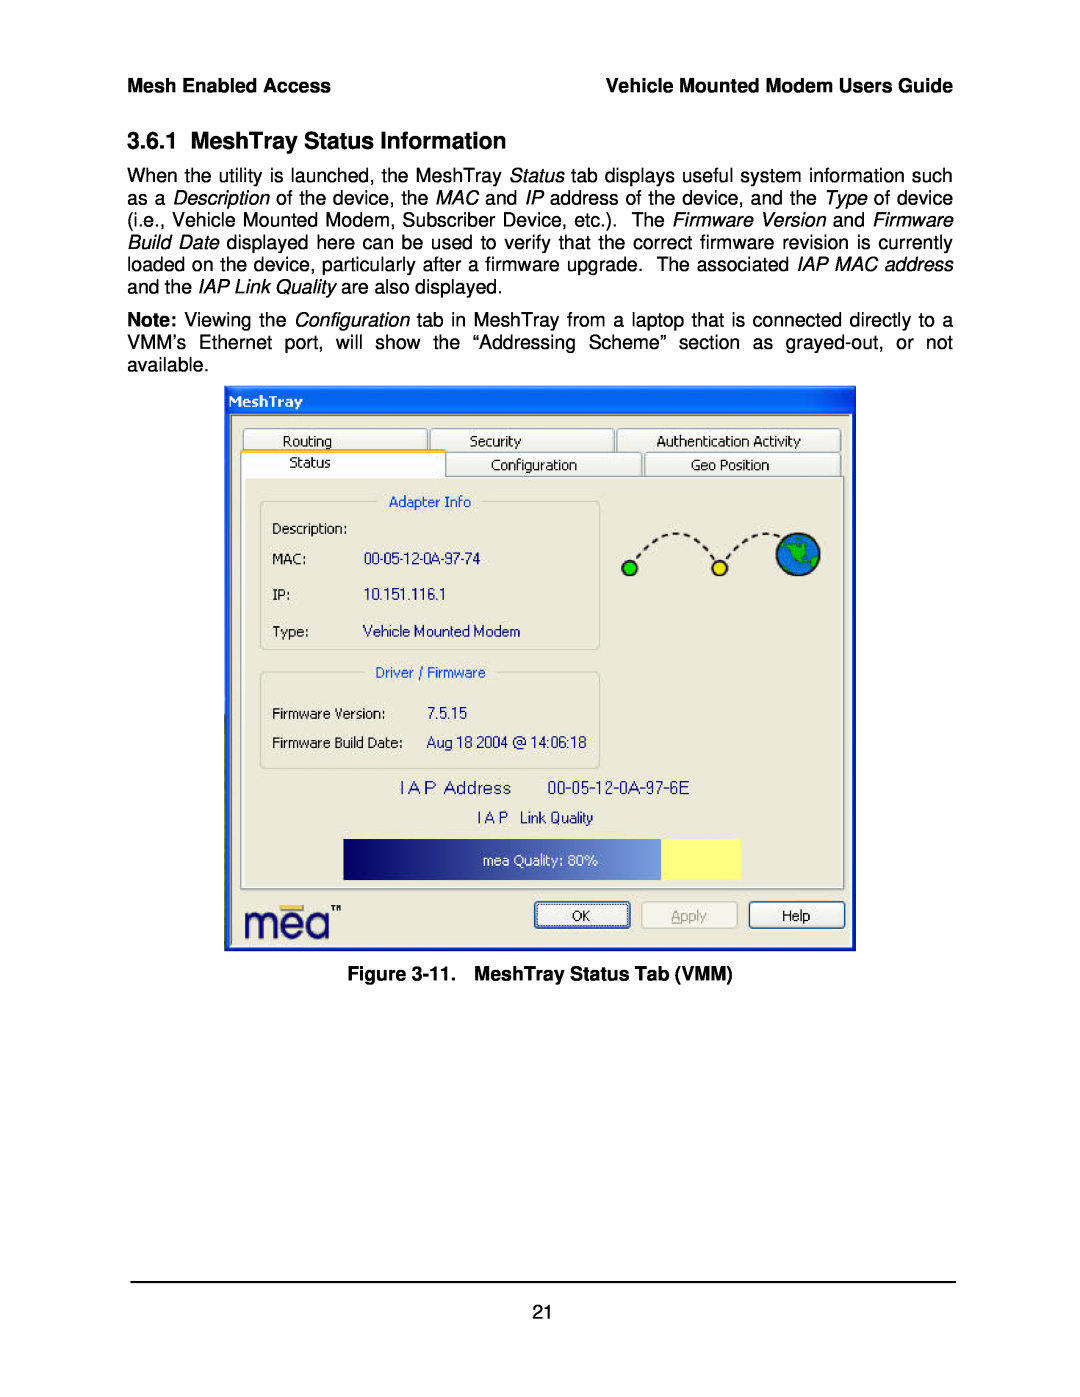 Motorola 3.1 manual MeshTray Status Information, 11. MeshTray Status Tab VMM, Mesh Enabled Access 